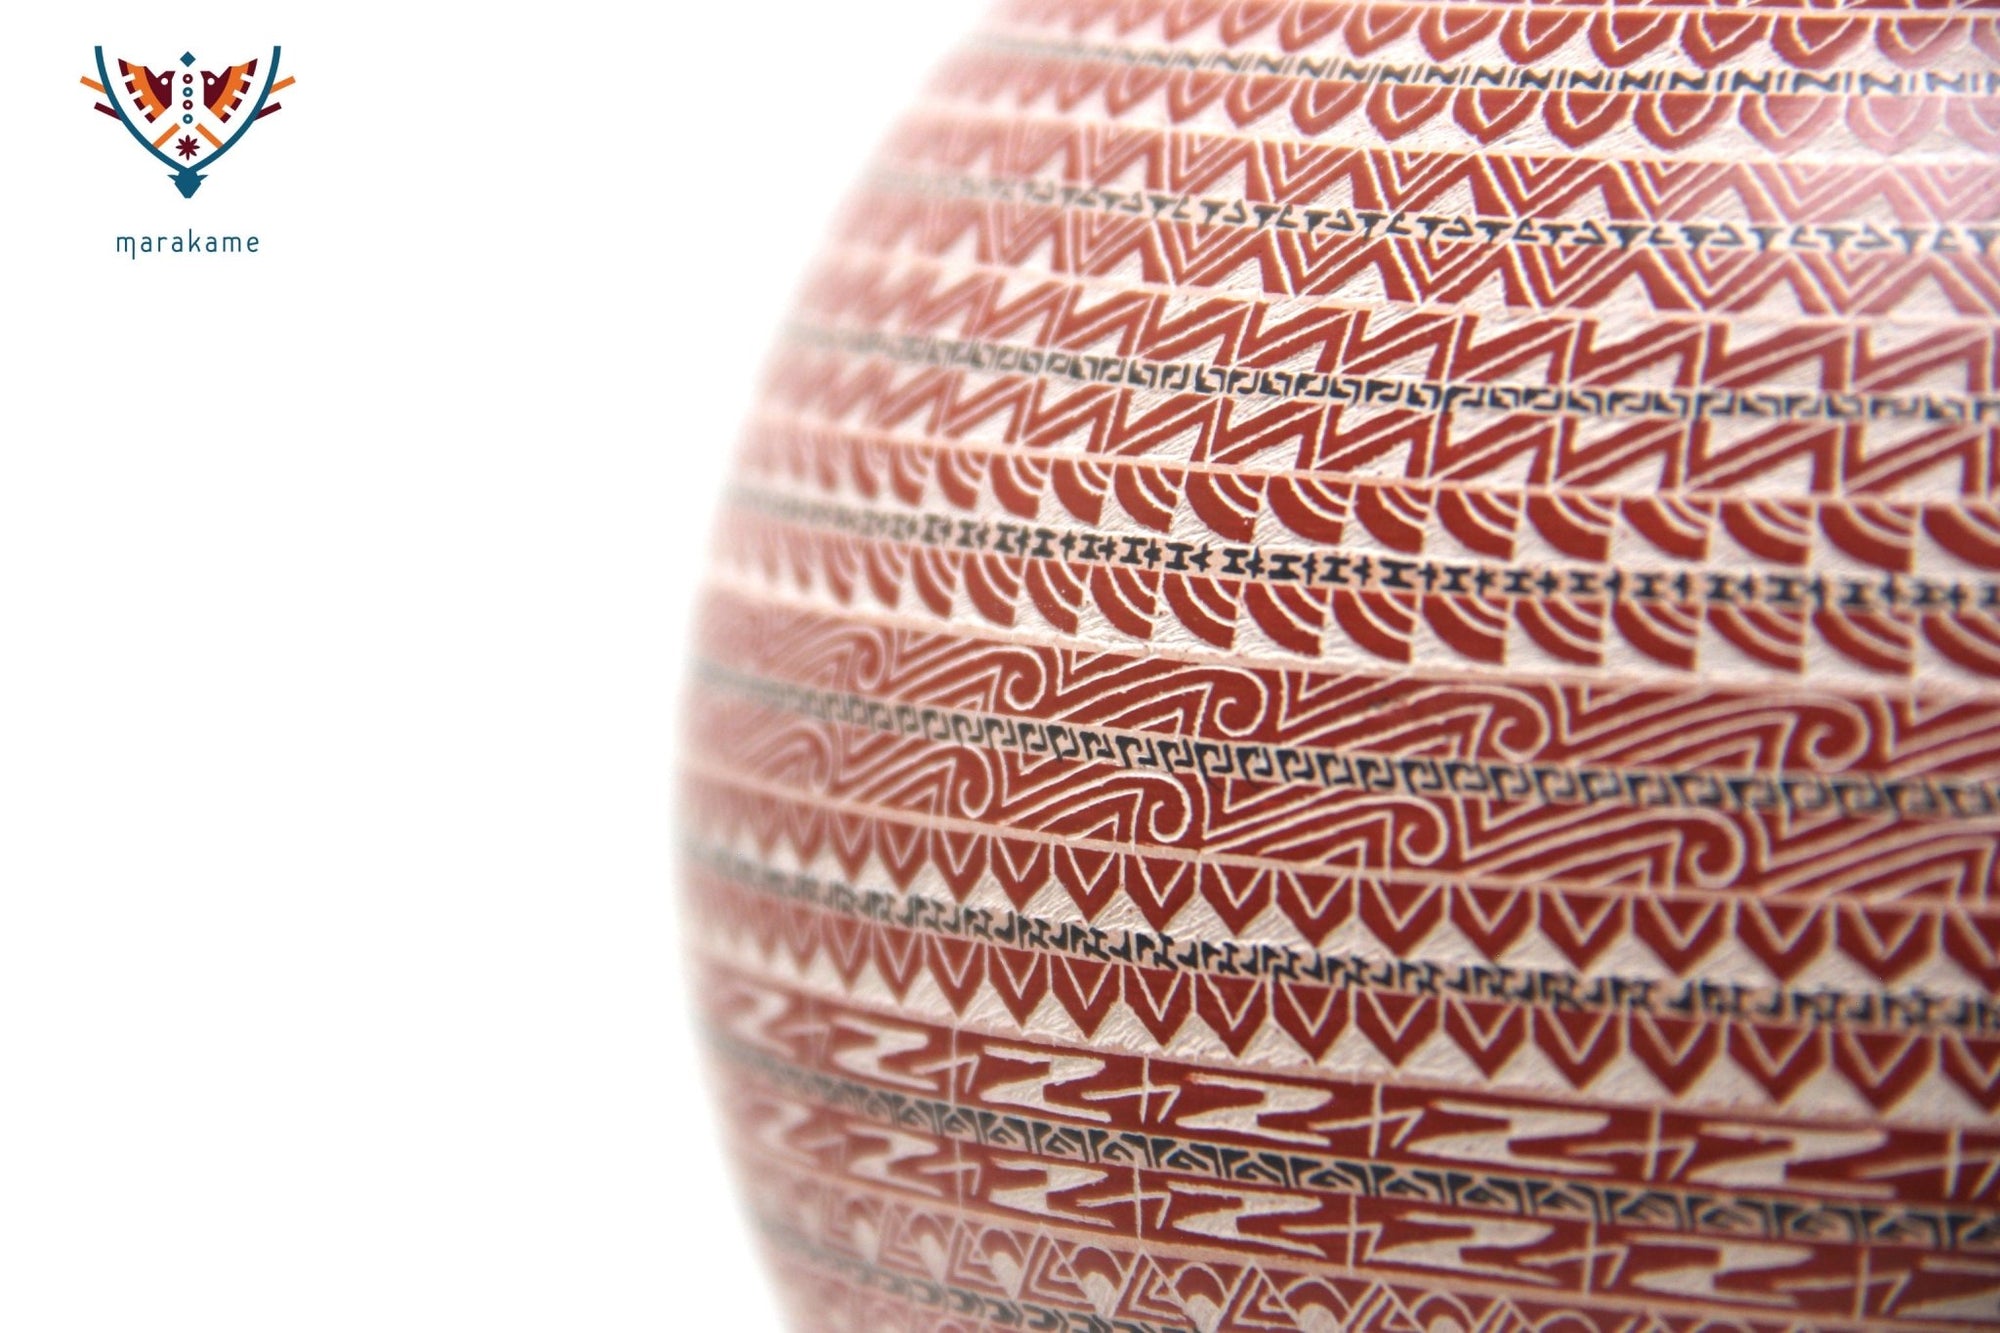 Mata Ortiz Ceramics - First Place in Sgraffito - Apacheta - Huichol Art - Marakame